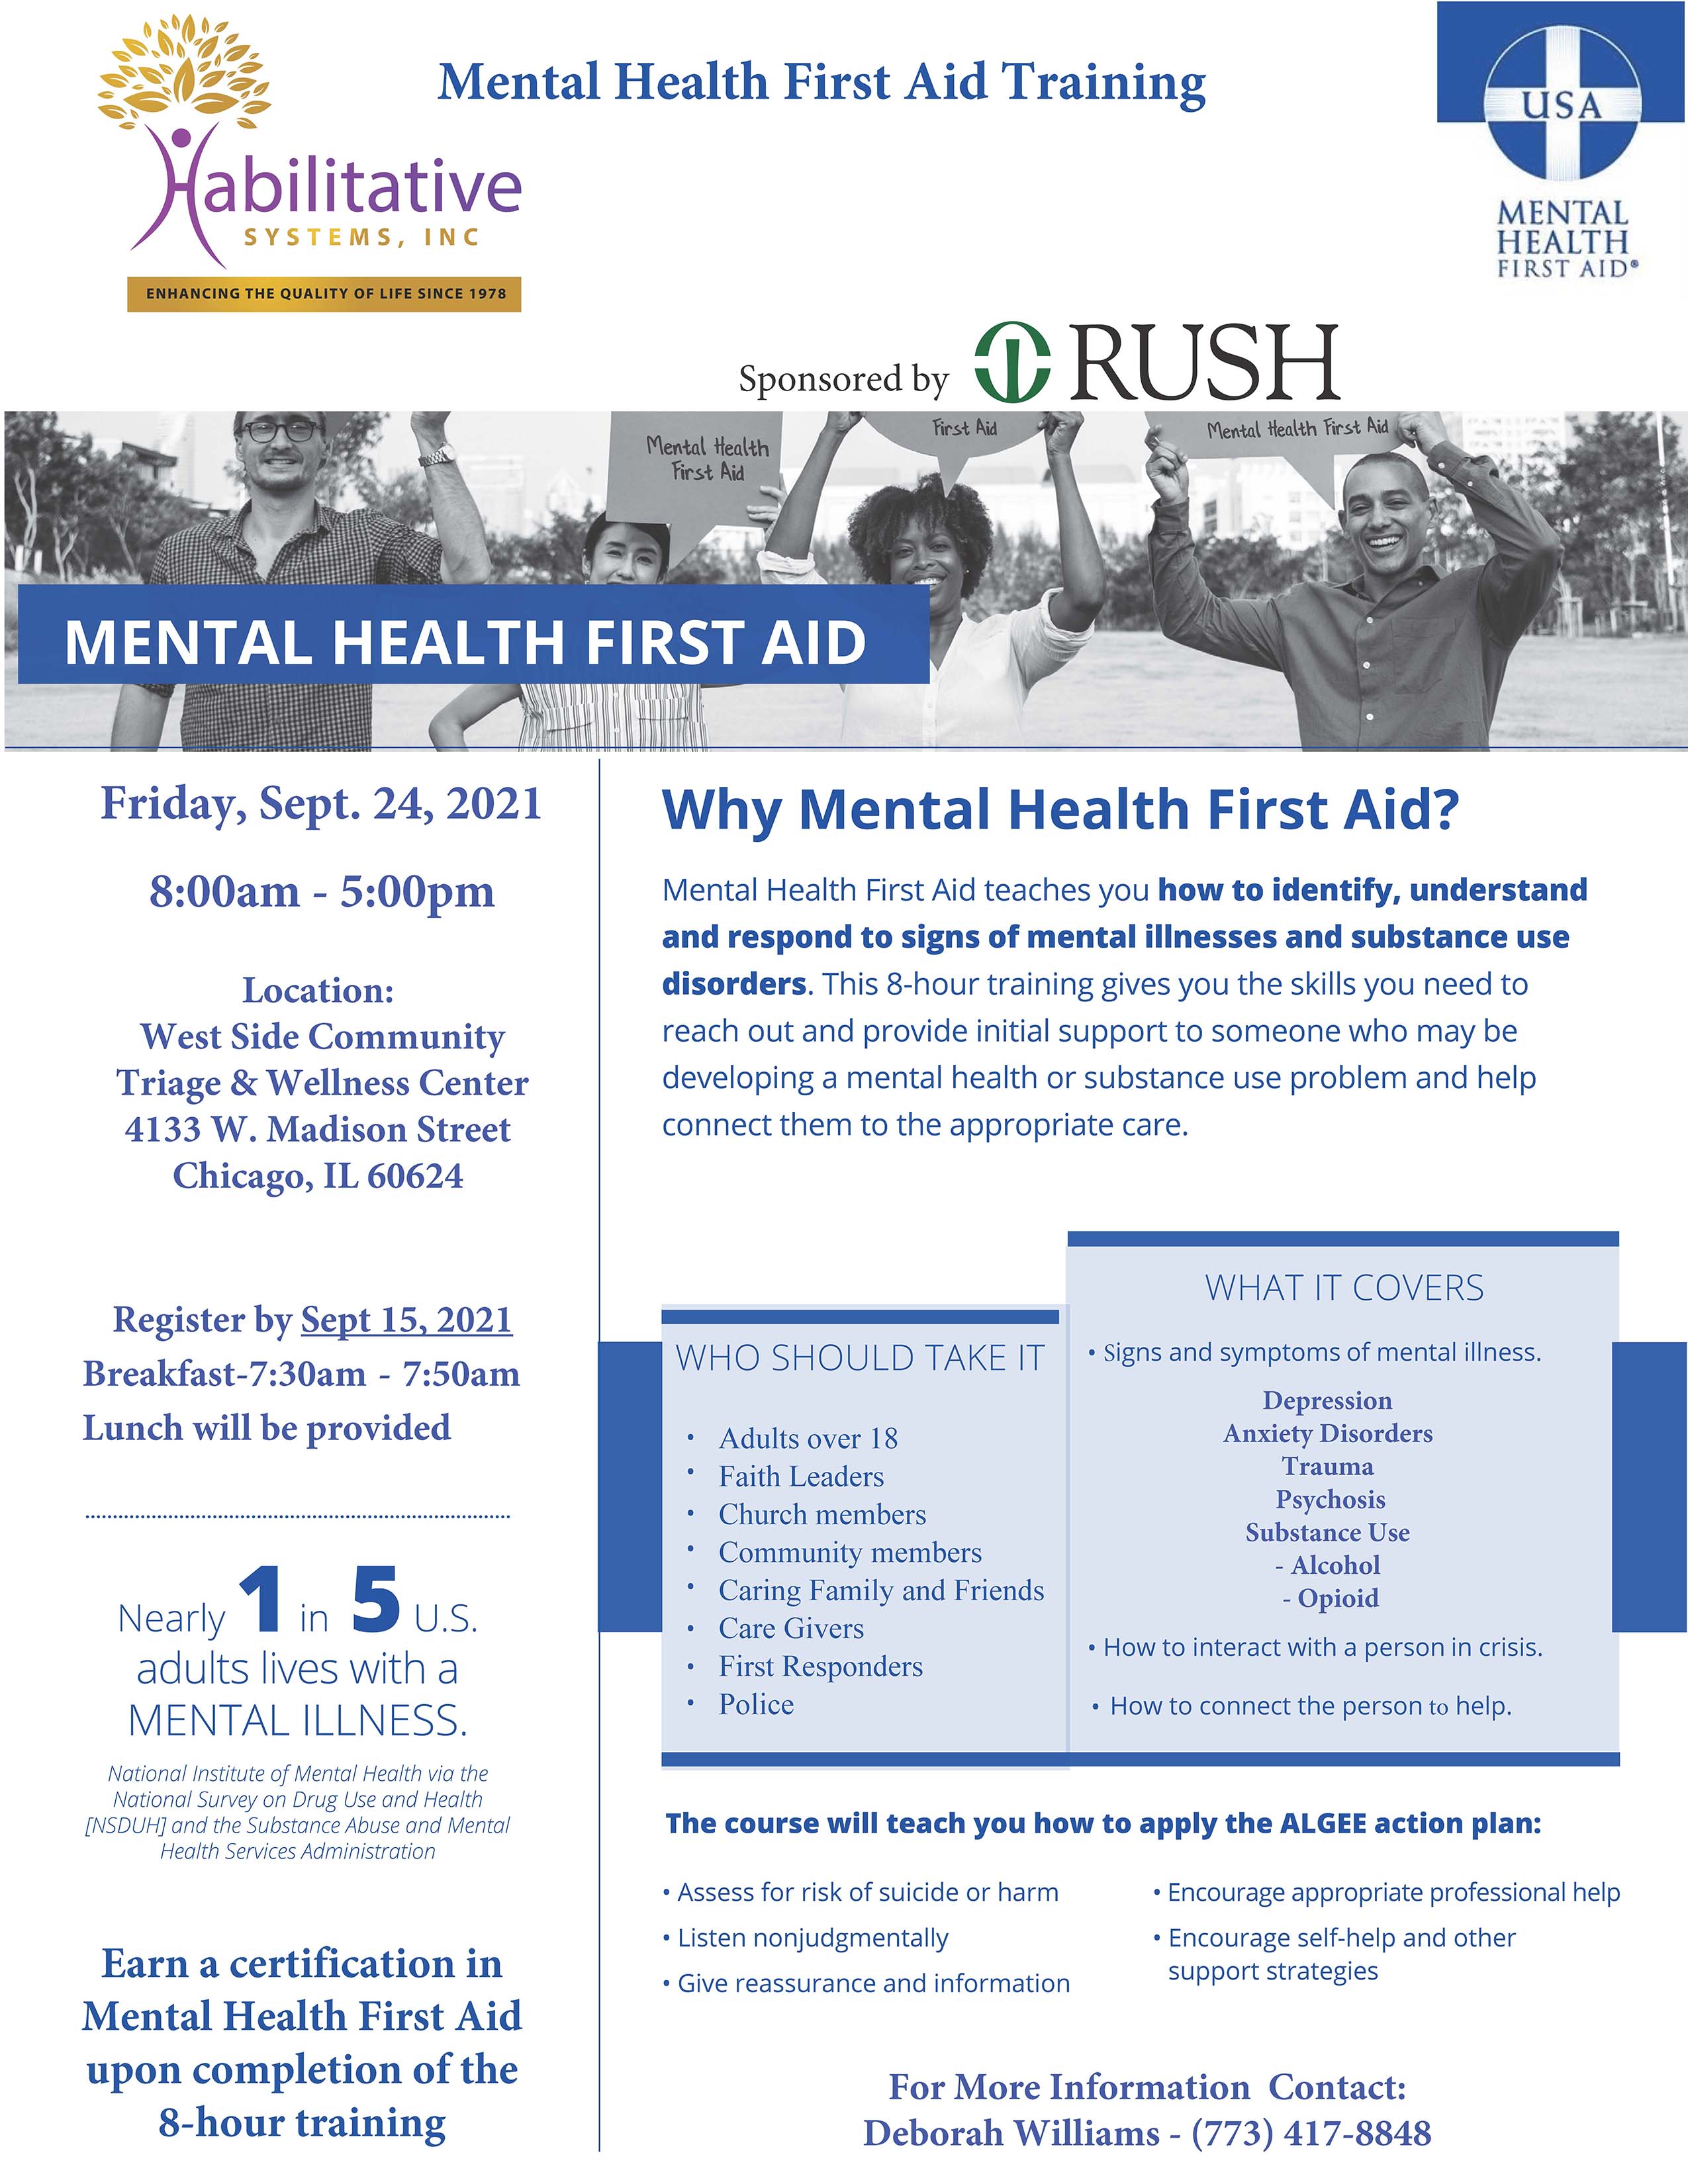 HSI Mental Health First Aid Flyer